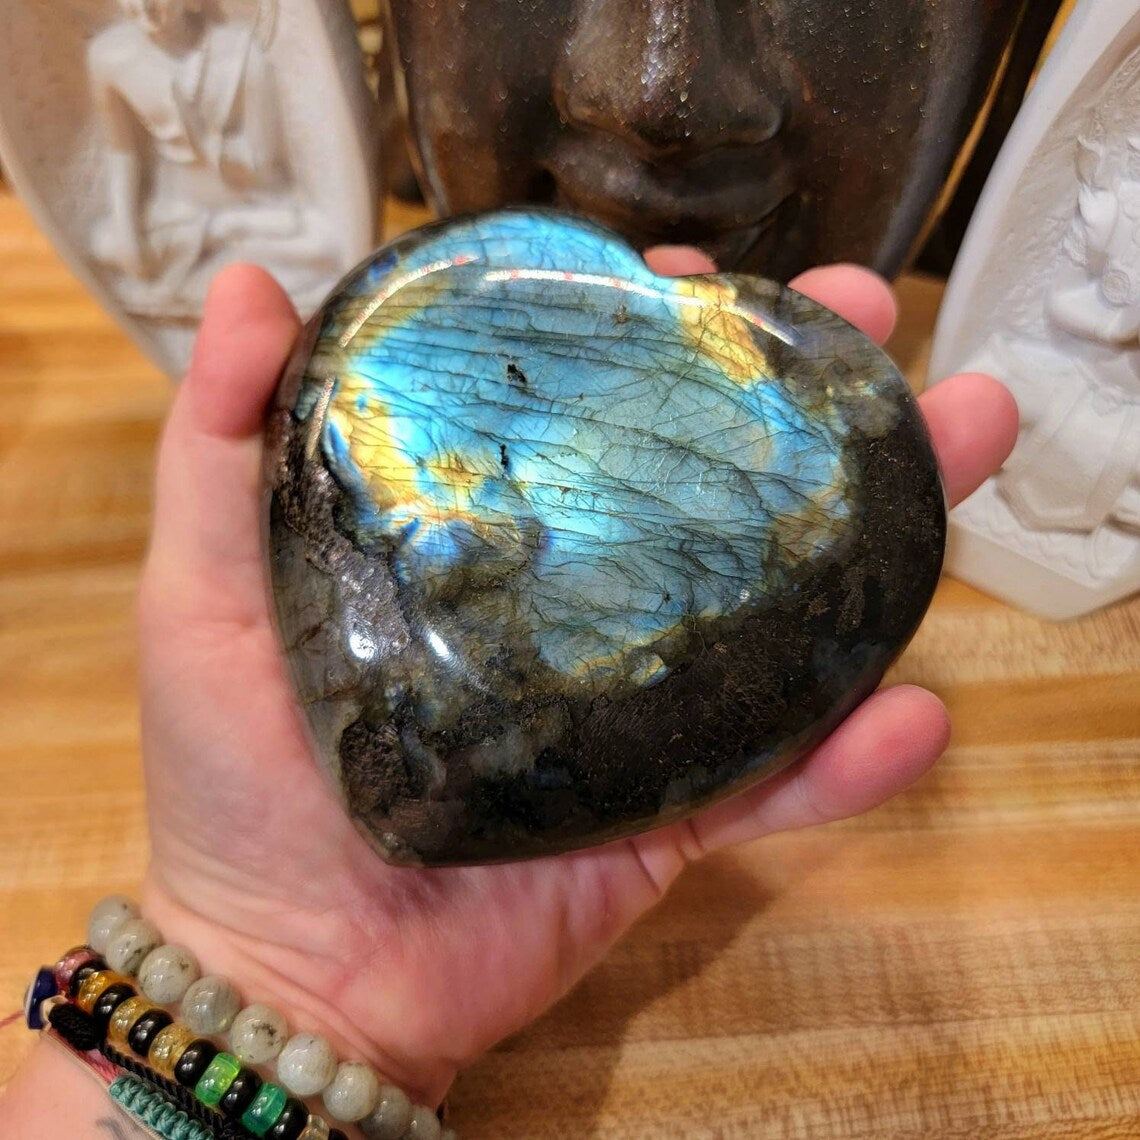 Large Labradorite Heart Stones Crystal Shop